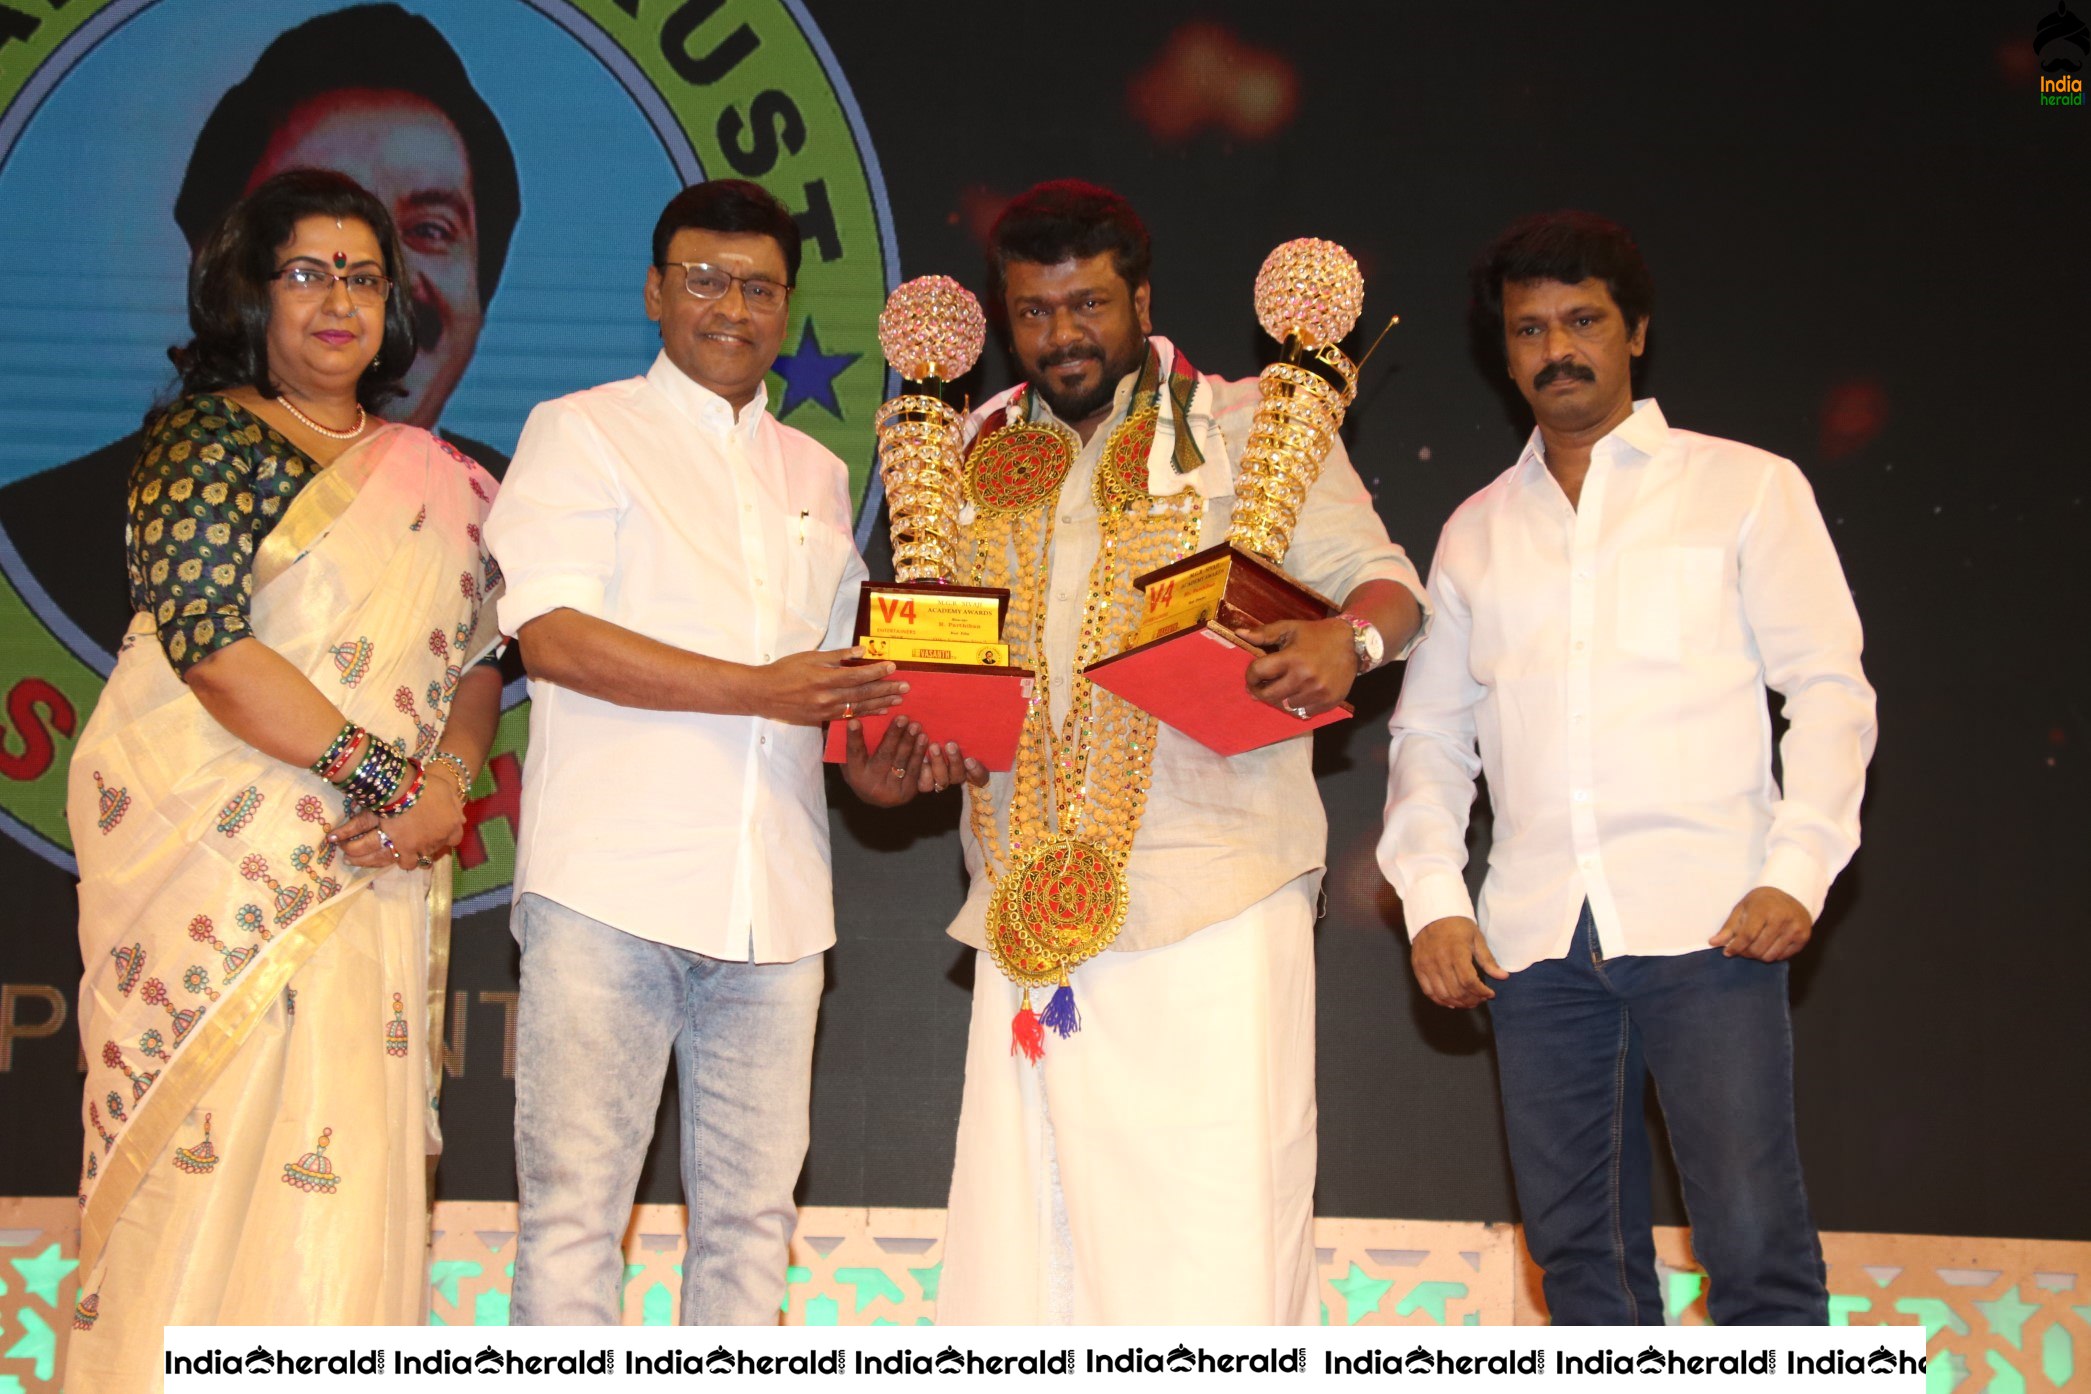 V4Academy Awards Event Photos at Chennai Set 3